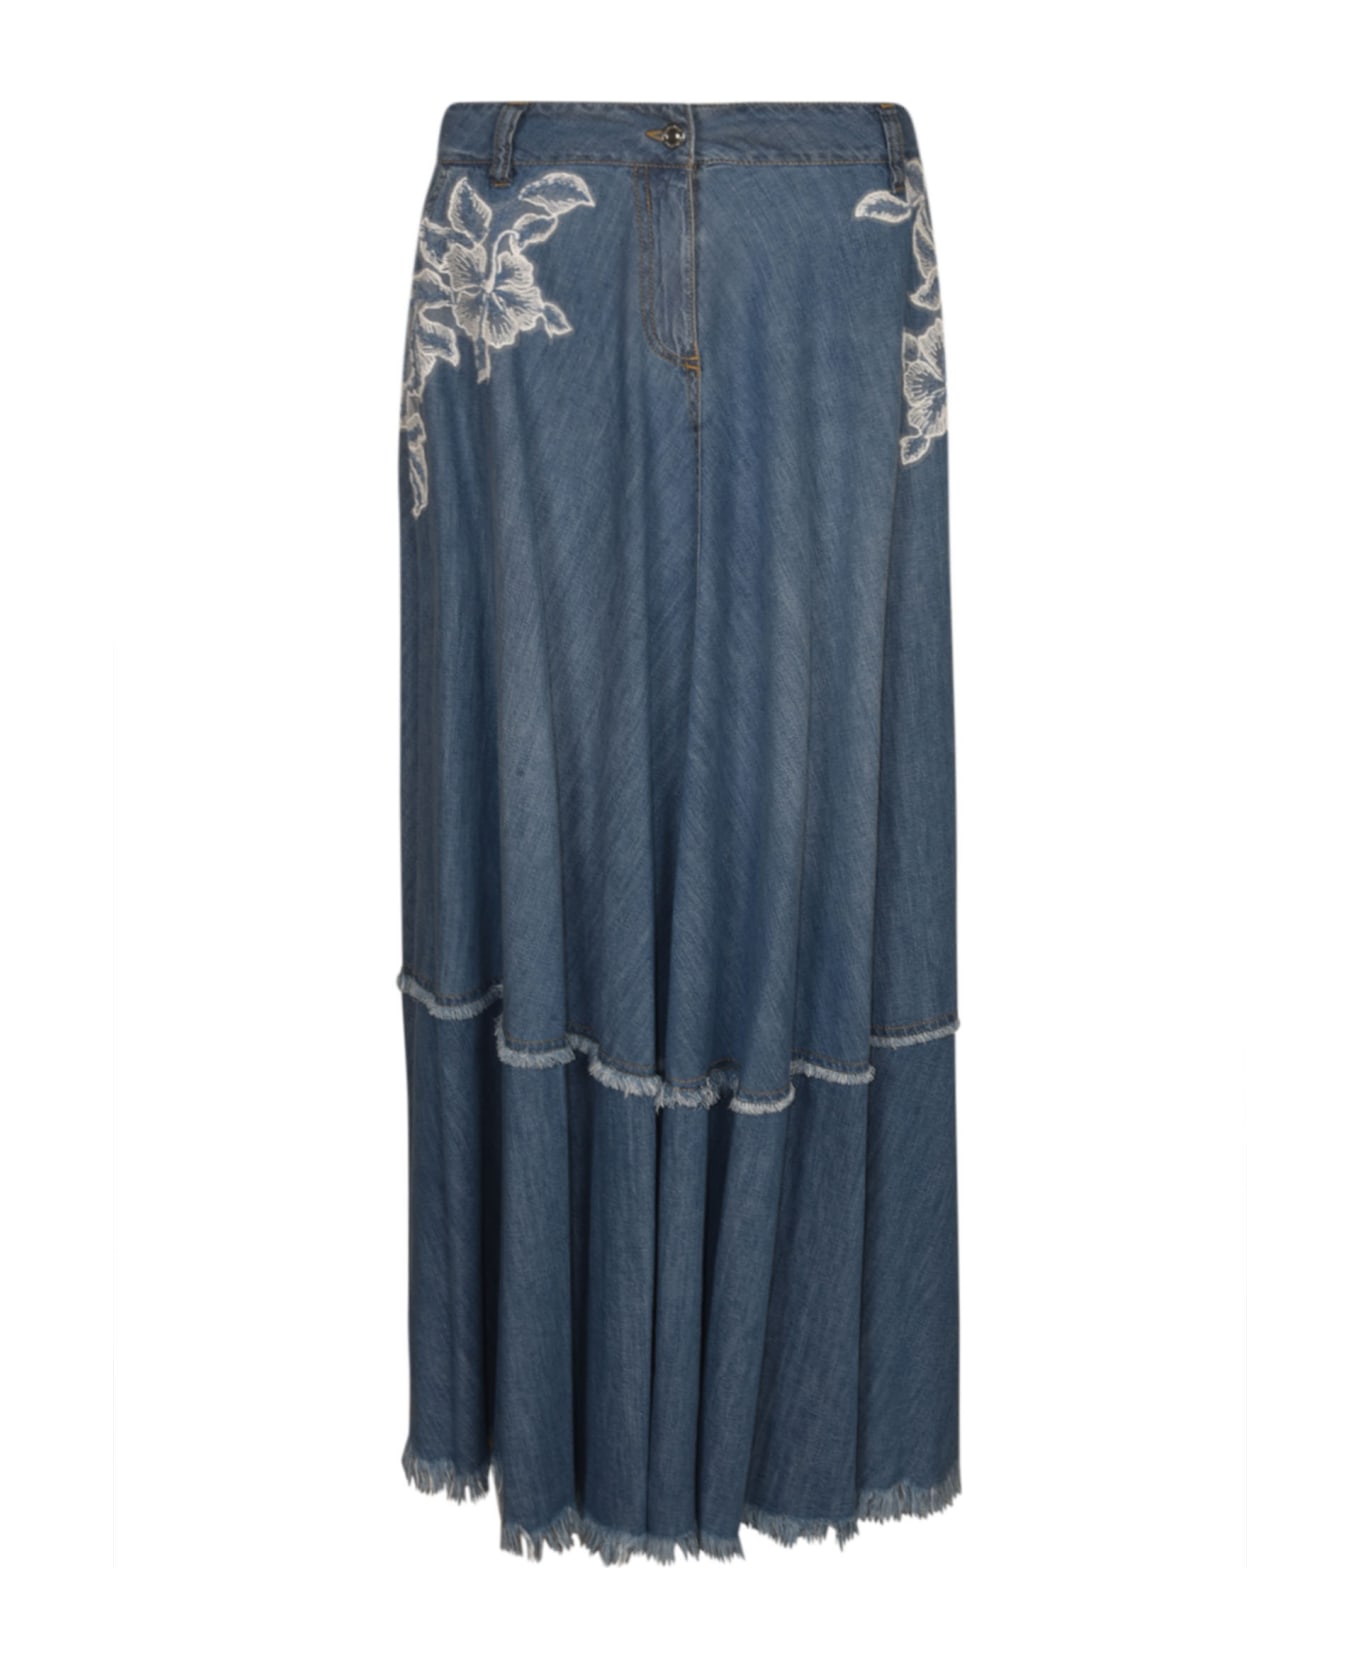 Ermanno Scervino Floral Embroidered Pleated Skirt - Denim